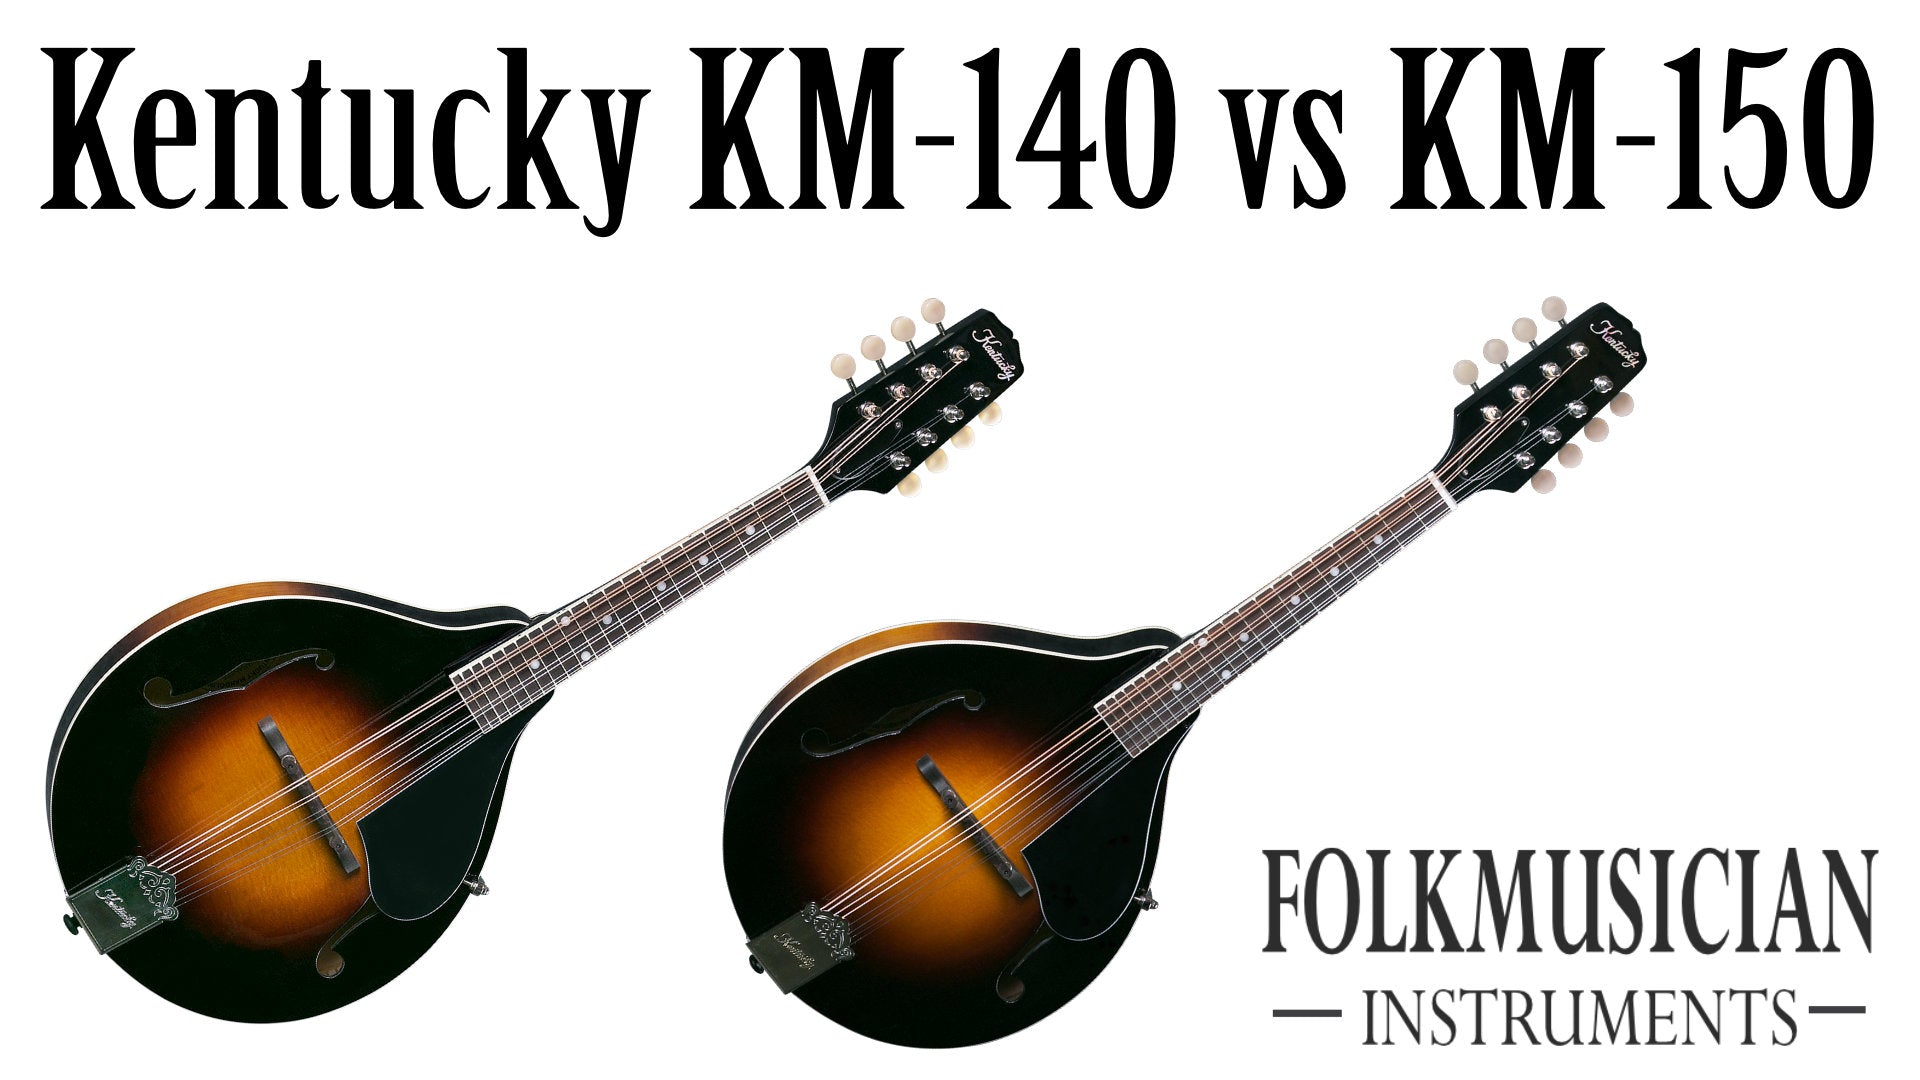 Kentucky KM-140 vs KM-150 Mandolin